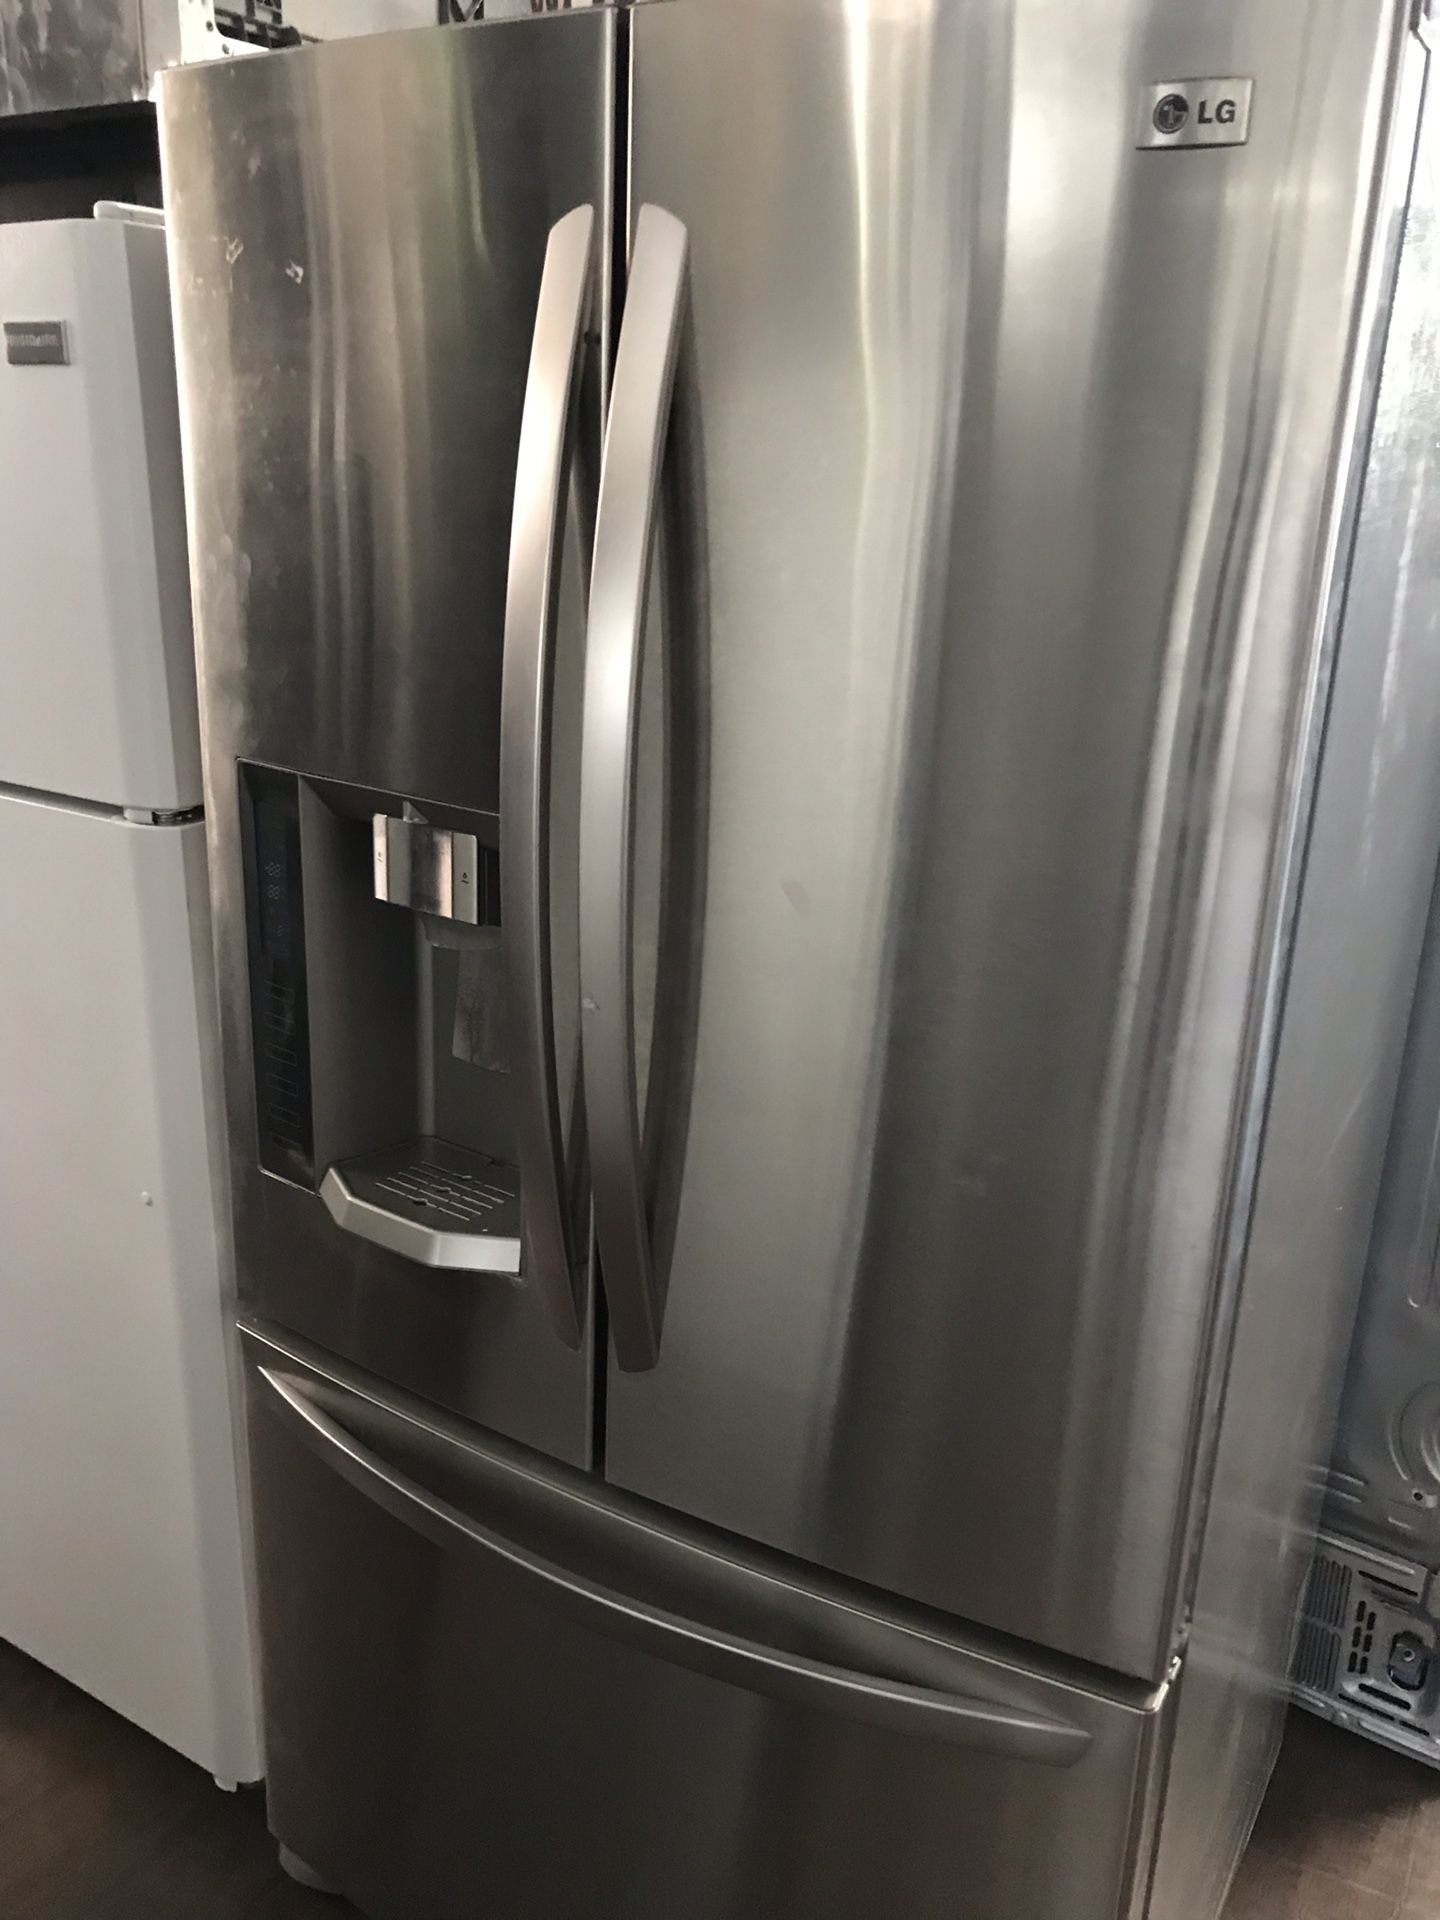 LG French door refrigerator standard size